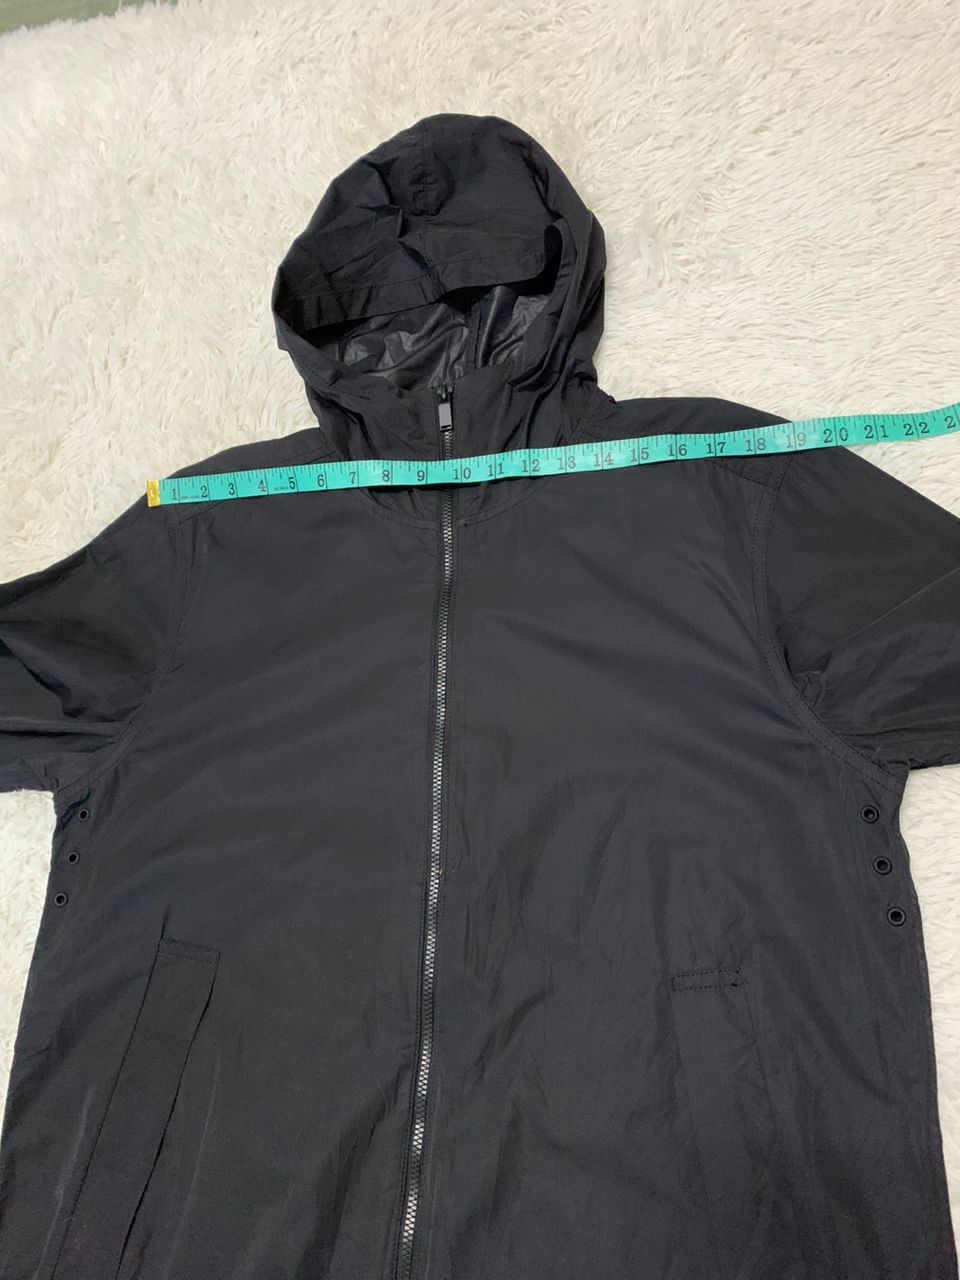 Adidas parka jacket 100% polyester - 4